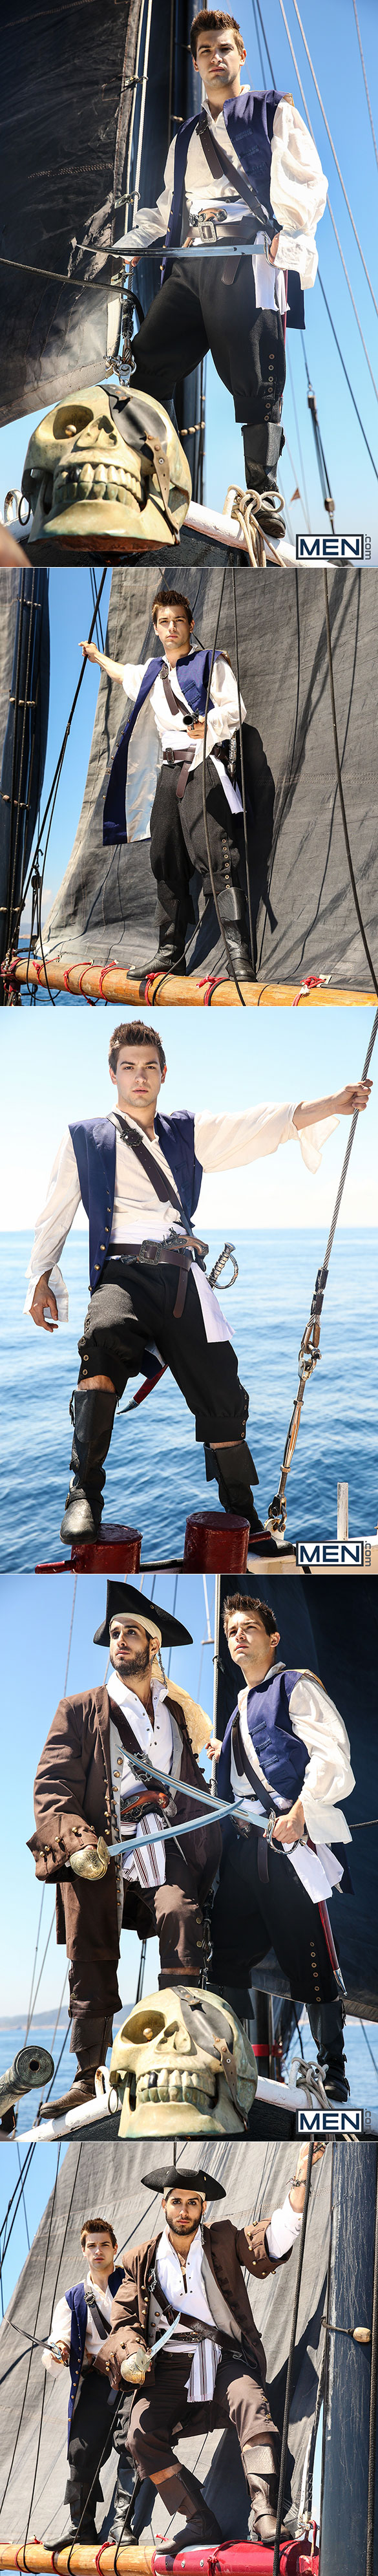 Men.com: Diego Sans fucks Johnny Rapid in "Pirates: A Gay XXX Parody, Part 1"